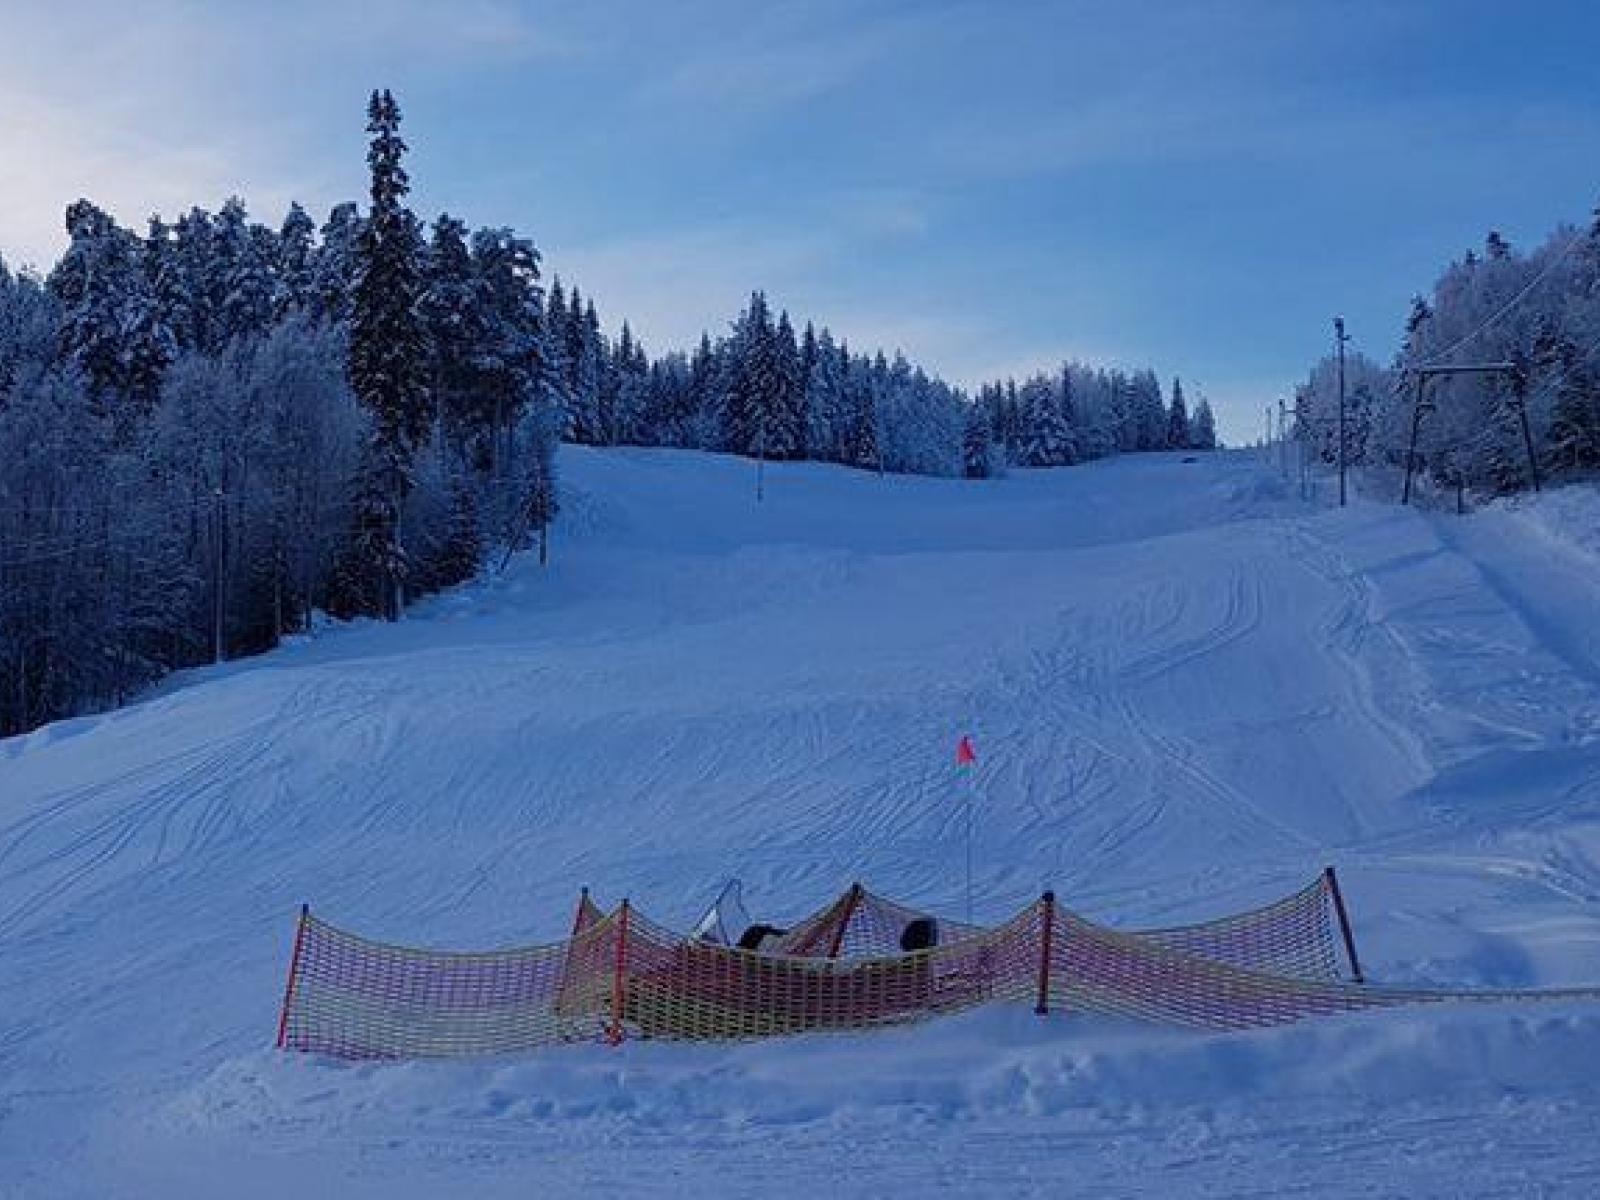 Ramsele ski slope